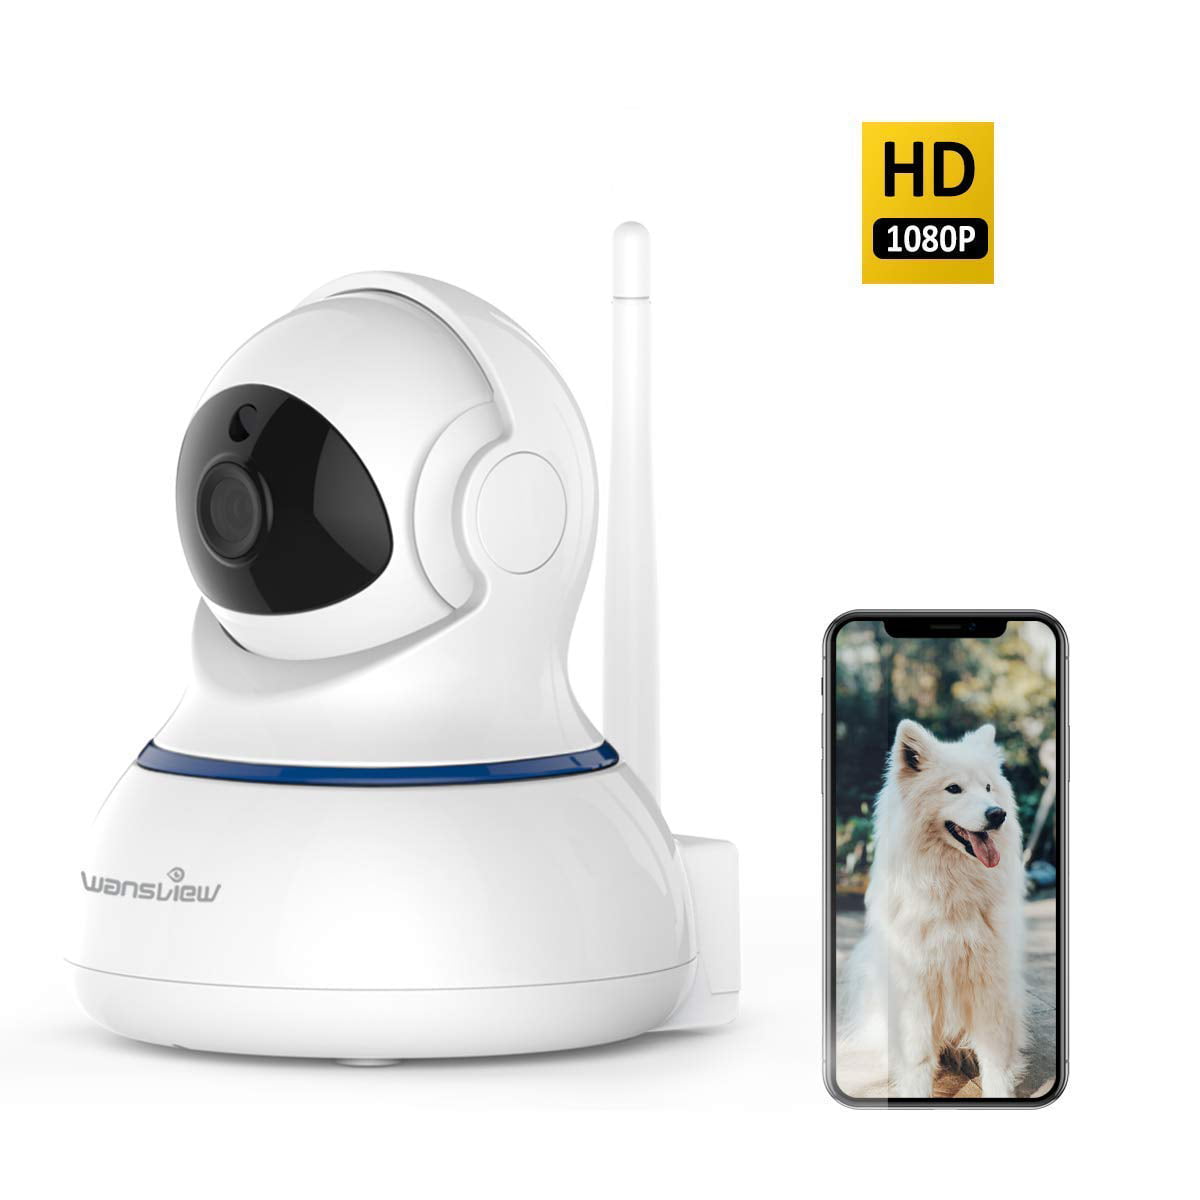 Wansview Wireless 1080P IP Camera WiFi Home Security Surveillance Camera 